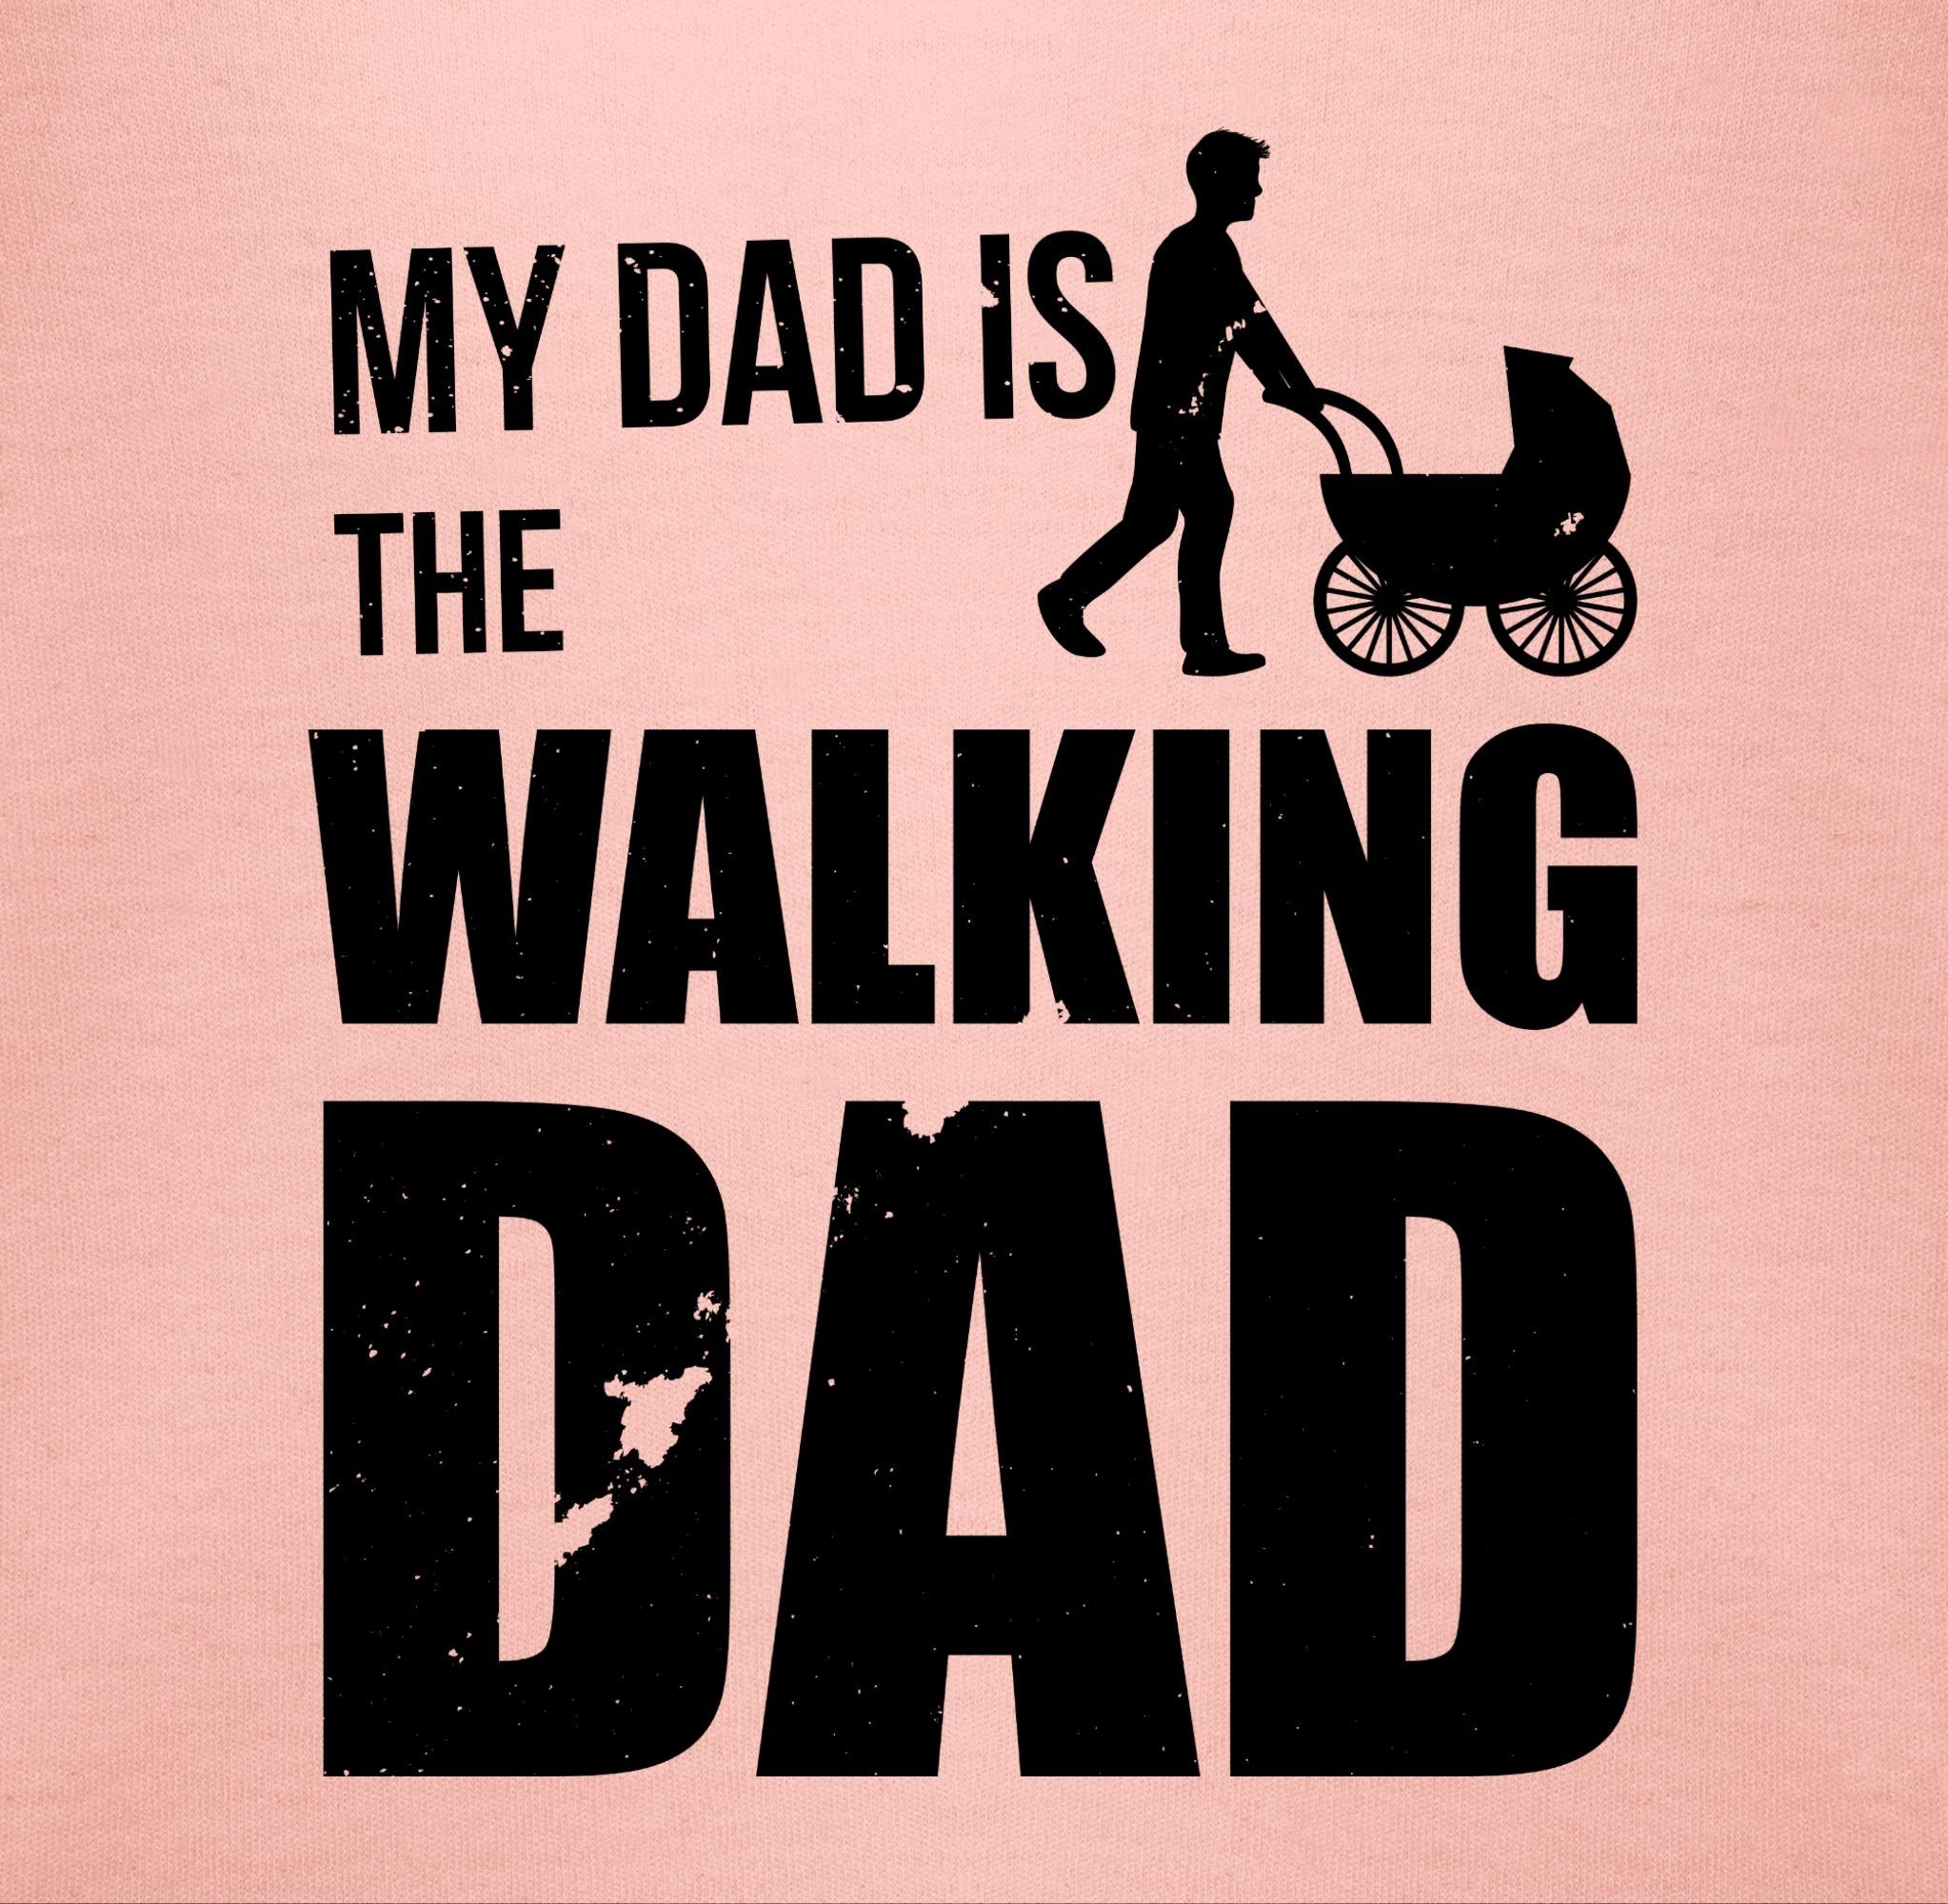 Geschenk the Dad Vatertag Babyrosa Baby Shirtbody Dad is My 2 Walking Shirtracer